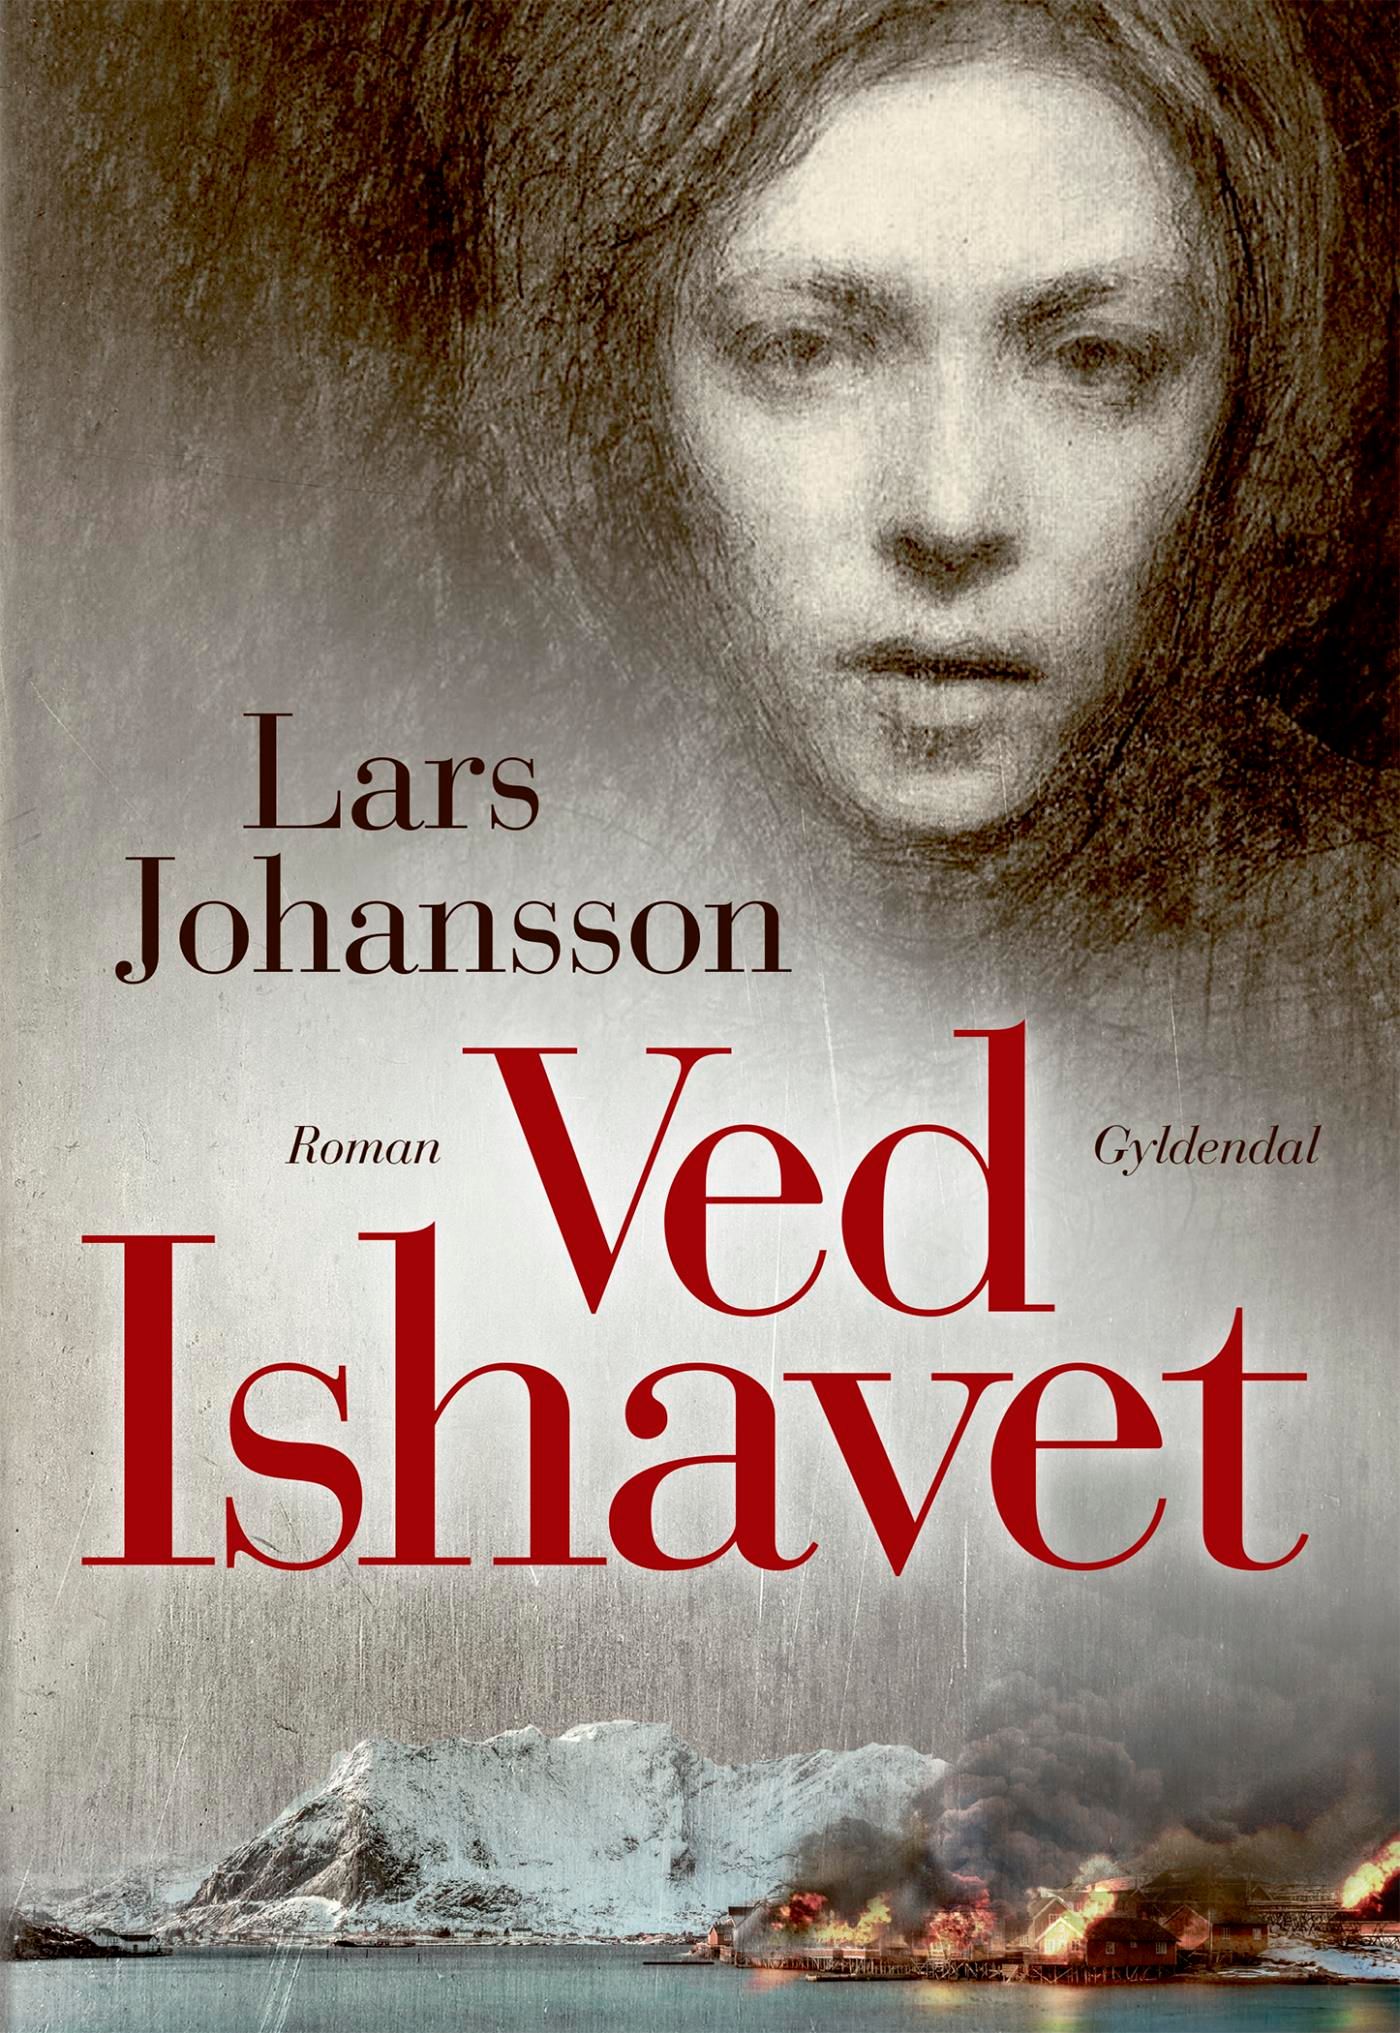 Ved Ishavet, eBook by Lars Johansson